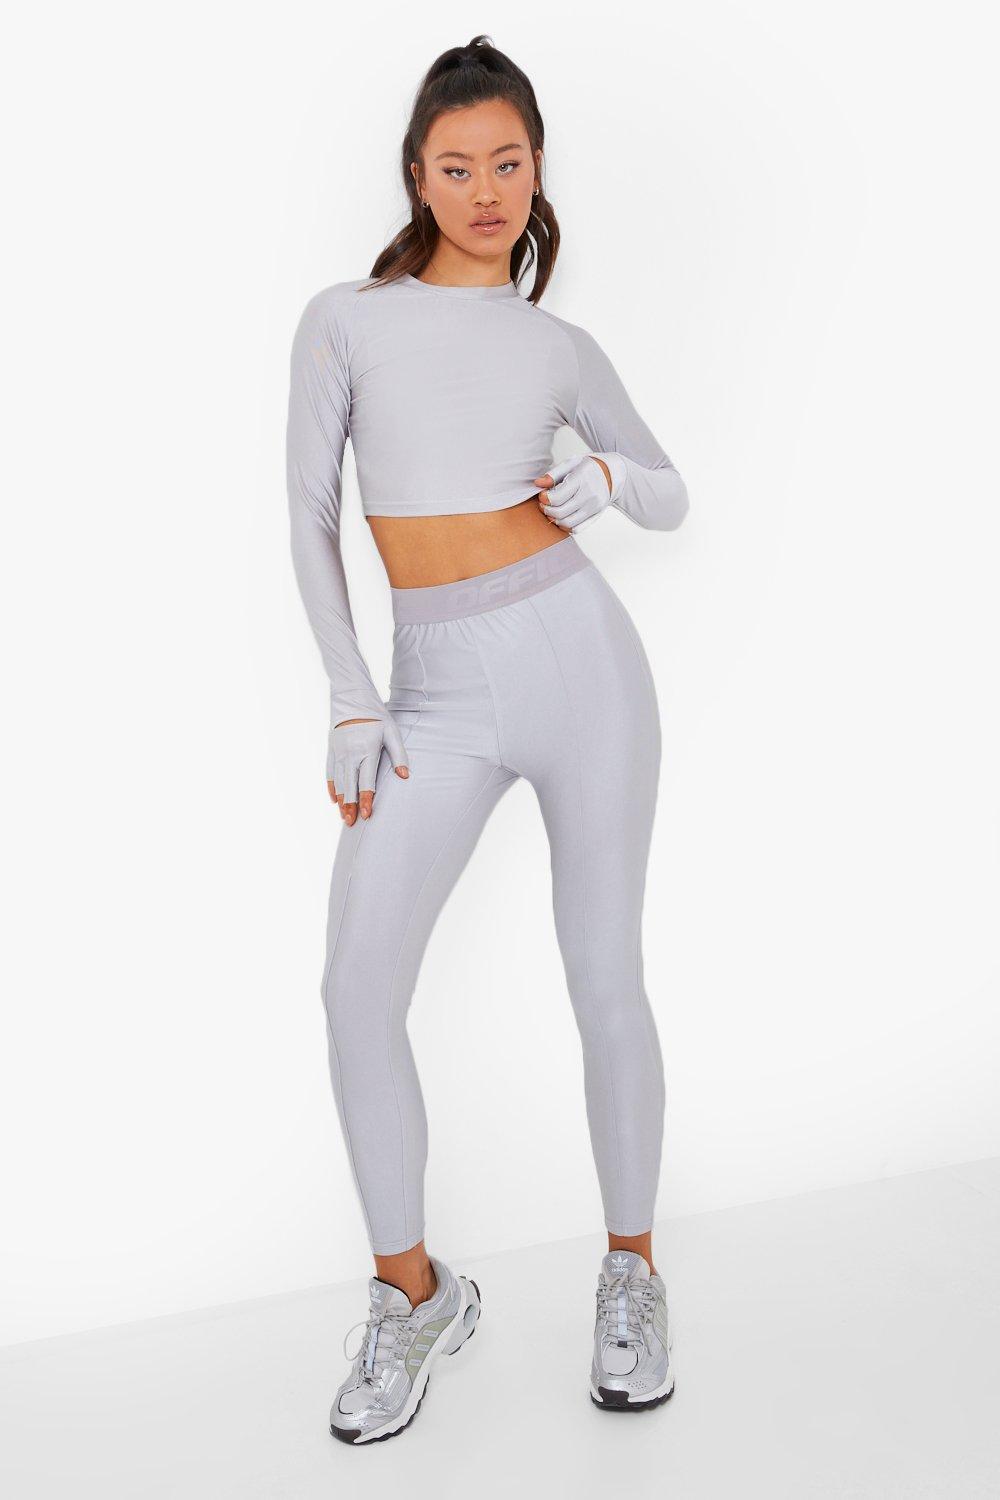 https://media.boohoo.com/i/boohoo/fzz11796_silver_xl_2/female-silver-reflective-active-leggings